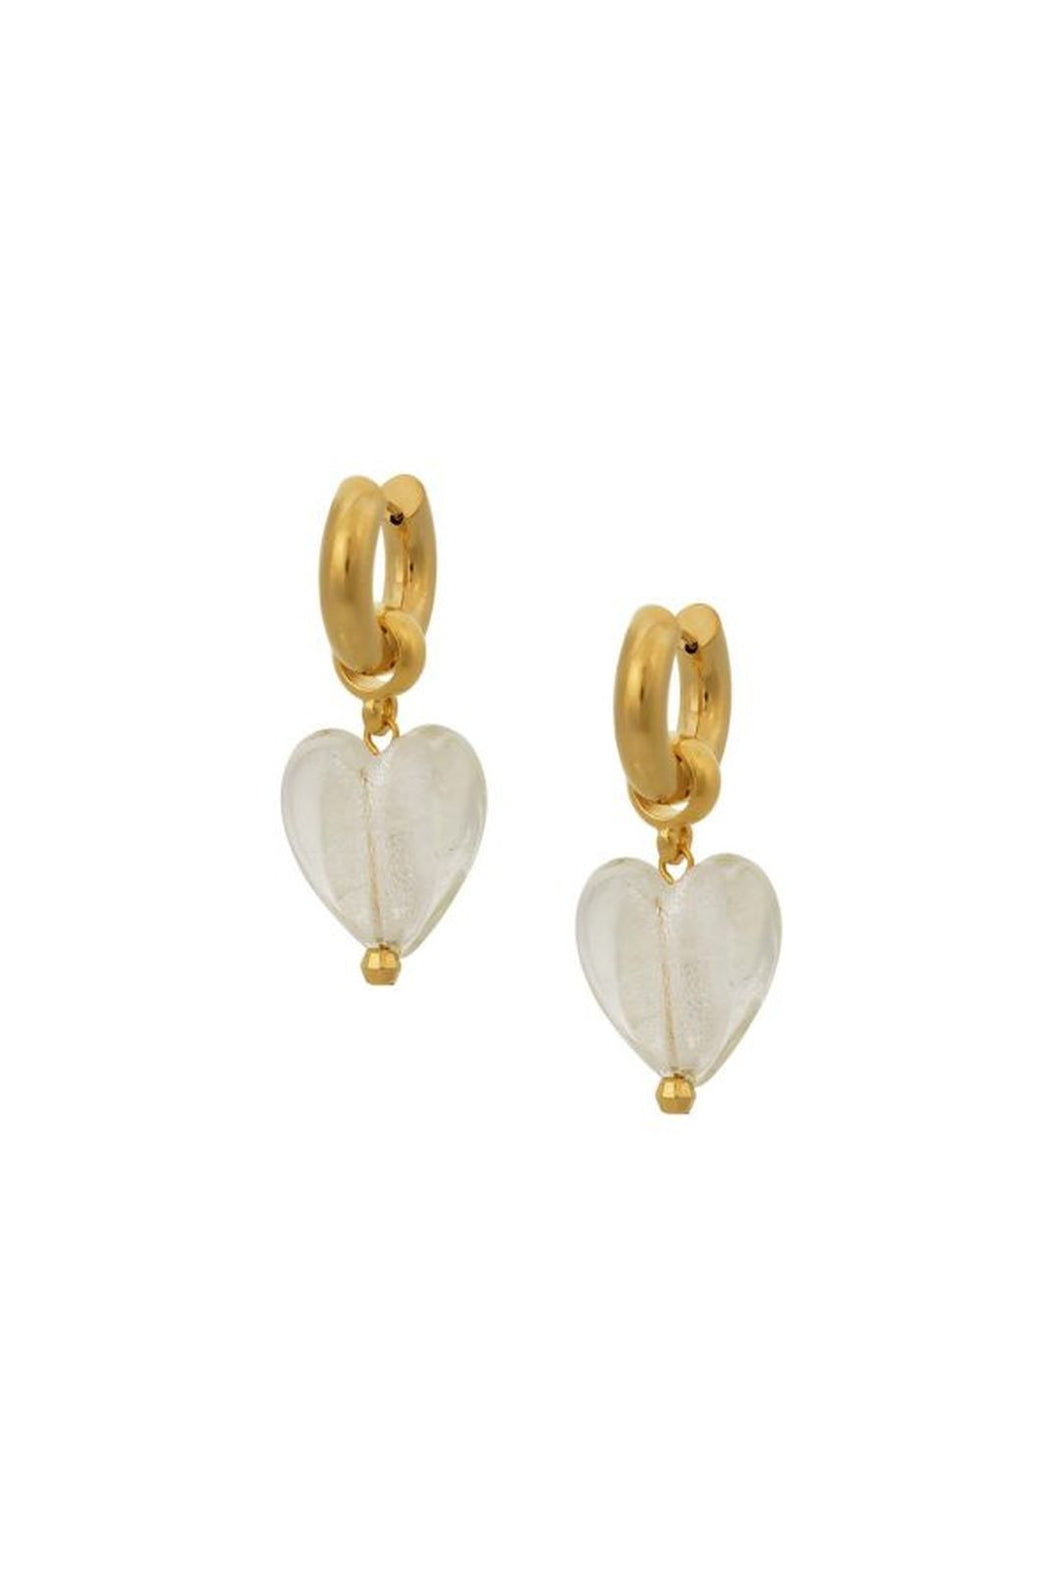 Mayol Jewelry - Crystal Heart of glass earrings